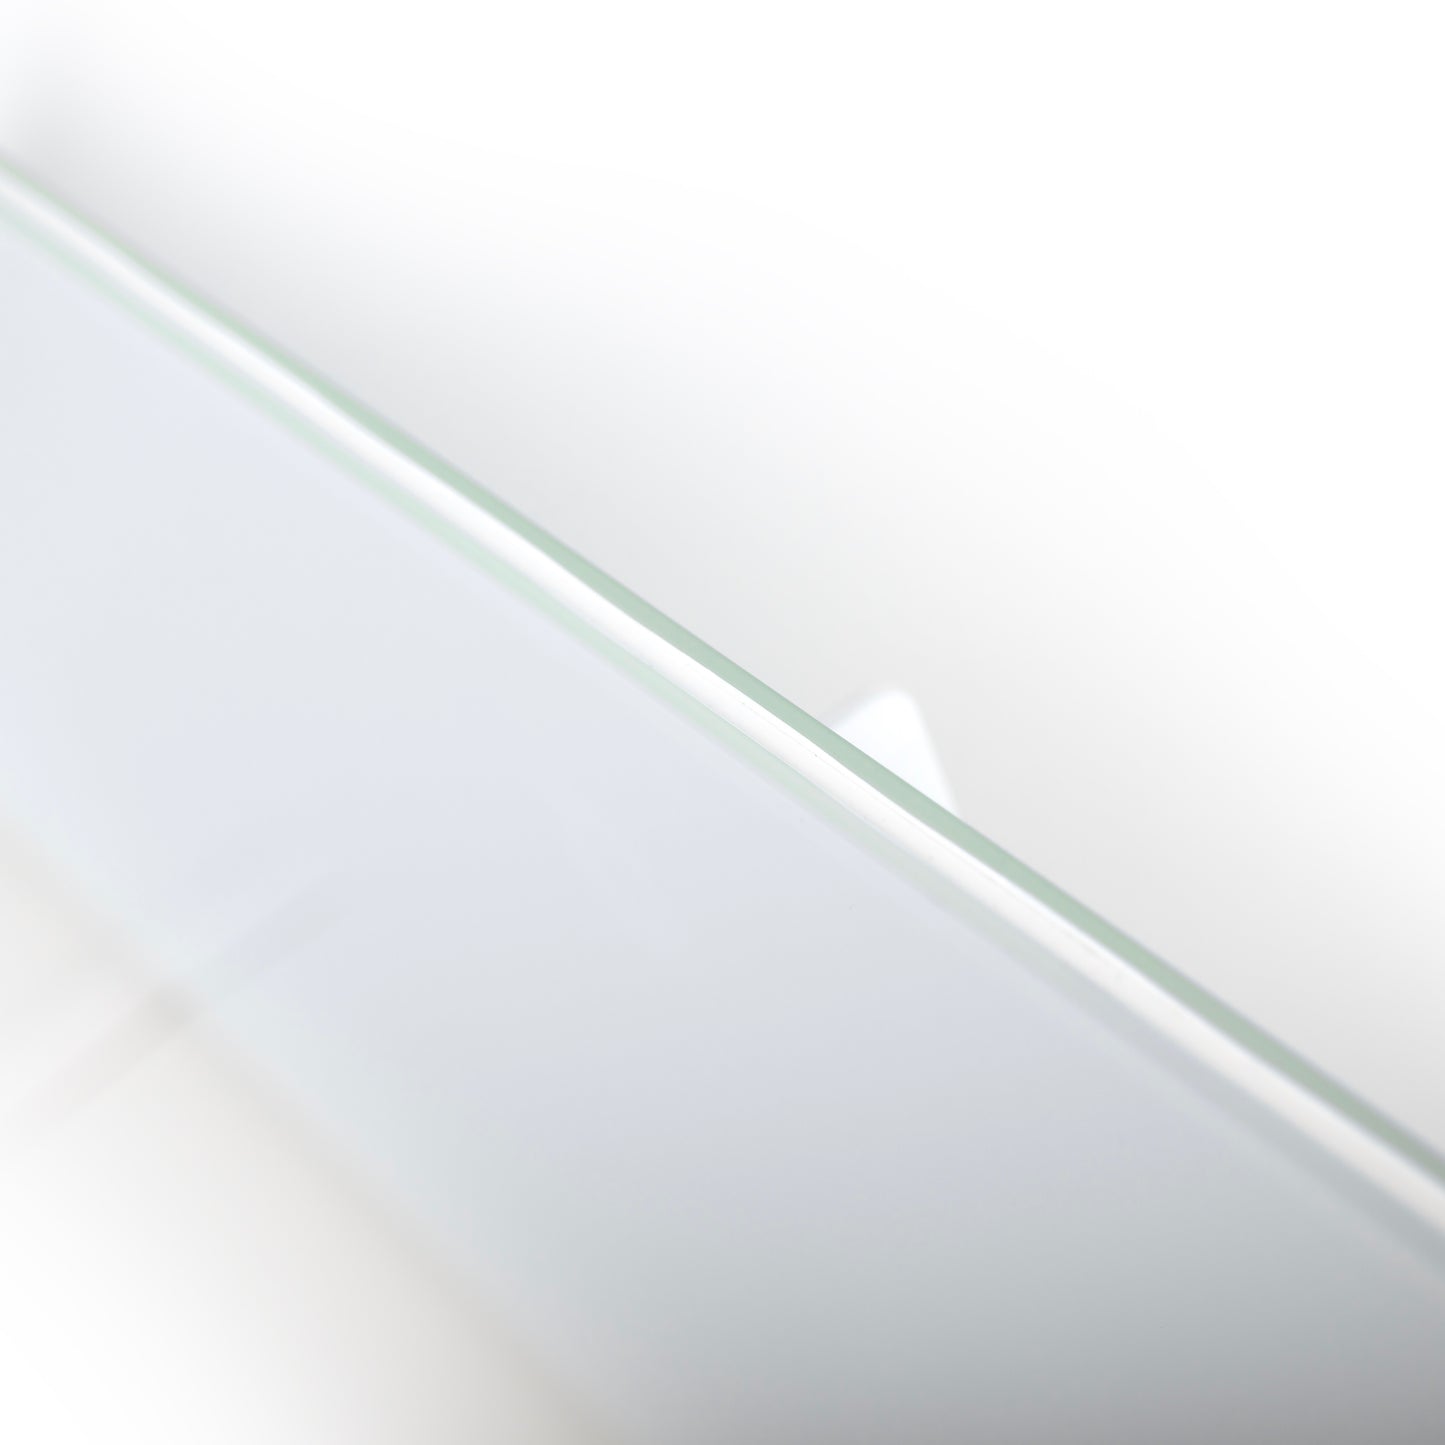 W670 White: Premium Infrared Environmentally Friendly Glass Heater